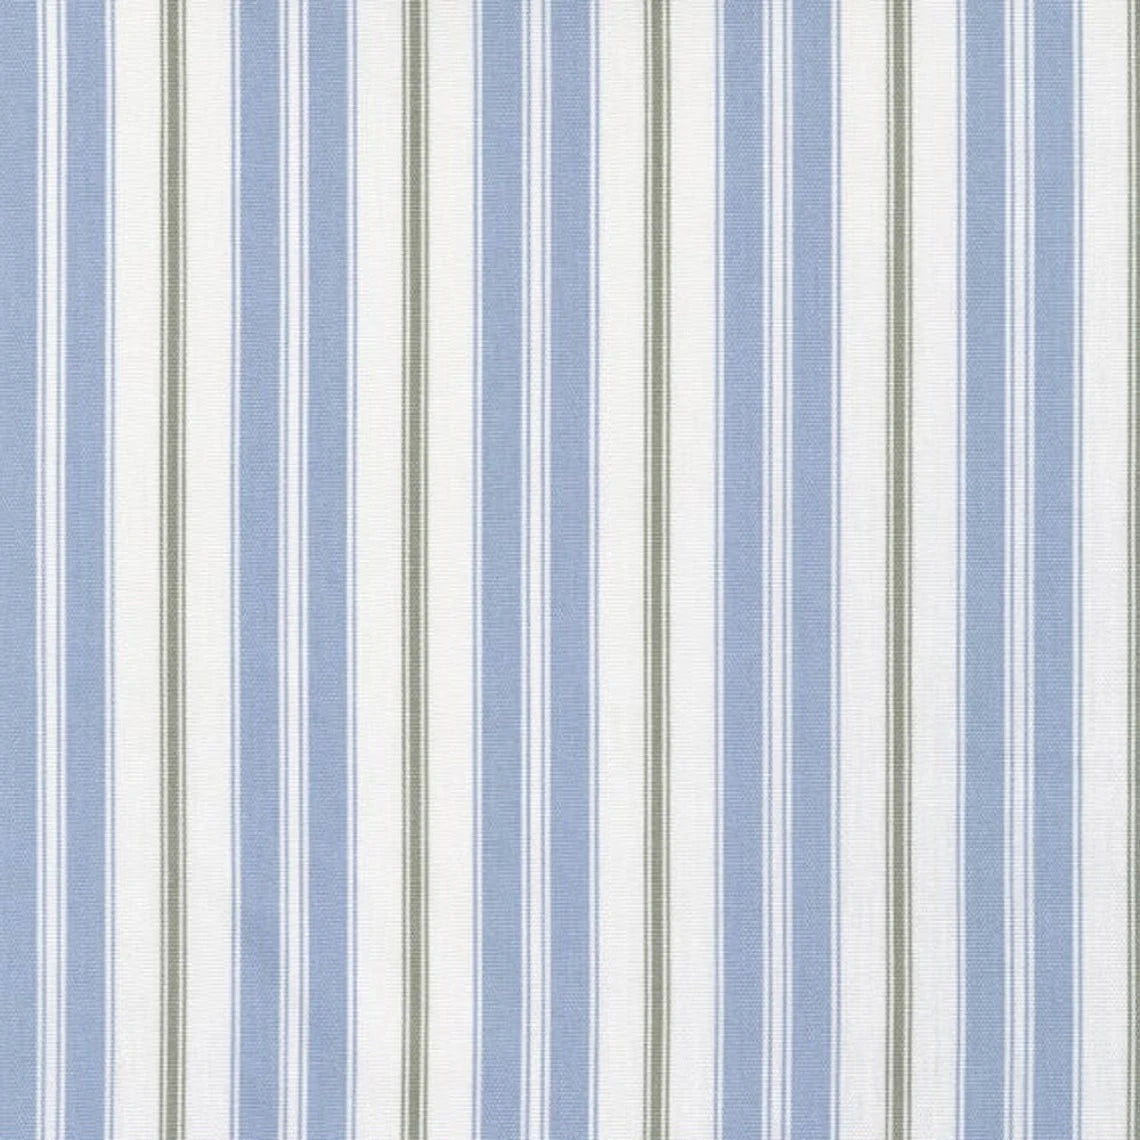 round tablecloth in newbury antique blue stripe- blue, green, white